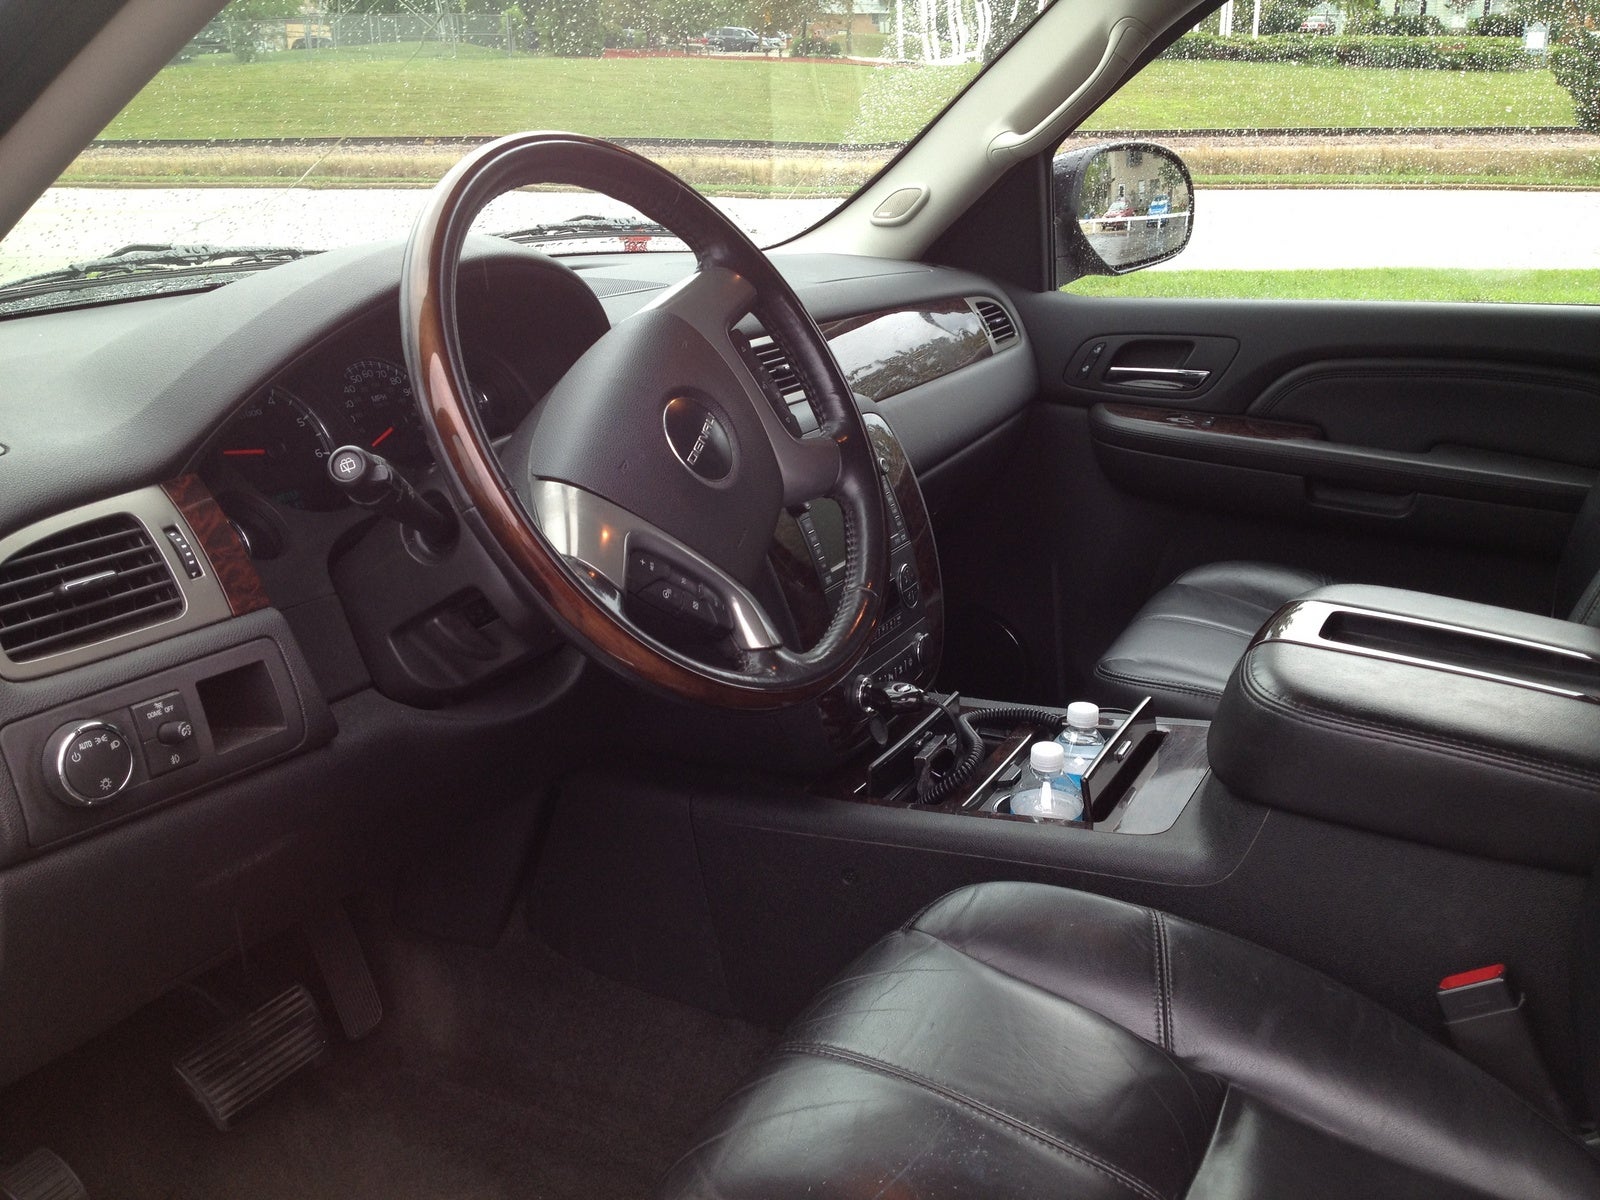 2008 yukon denali rear seat windows go completely download